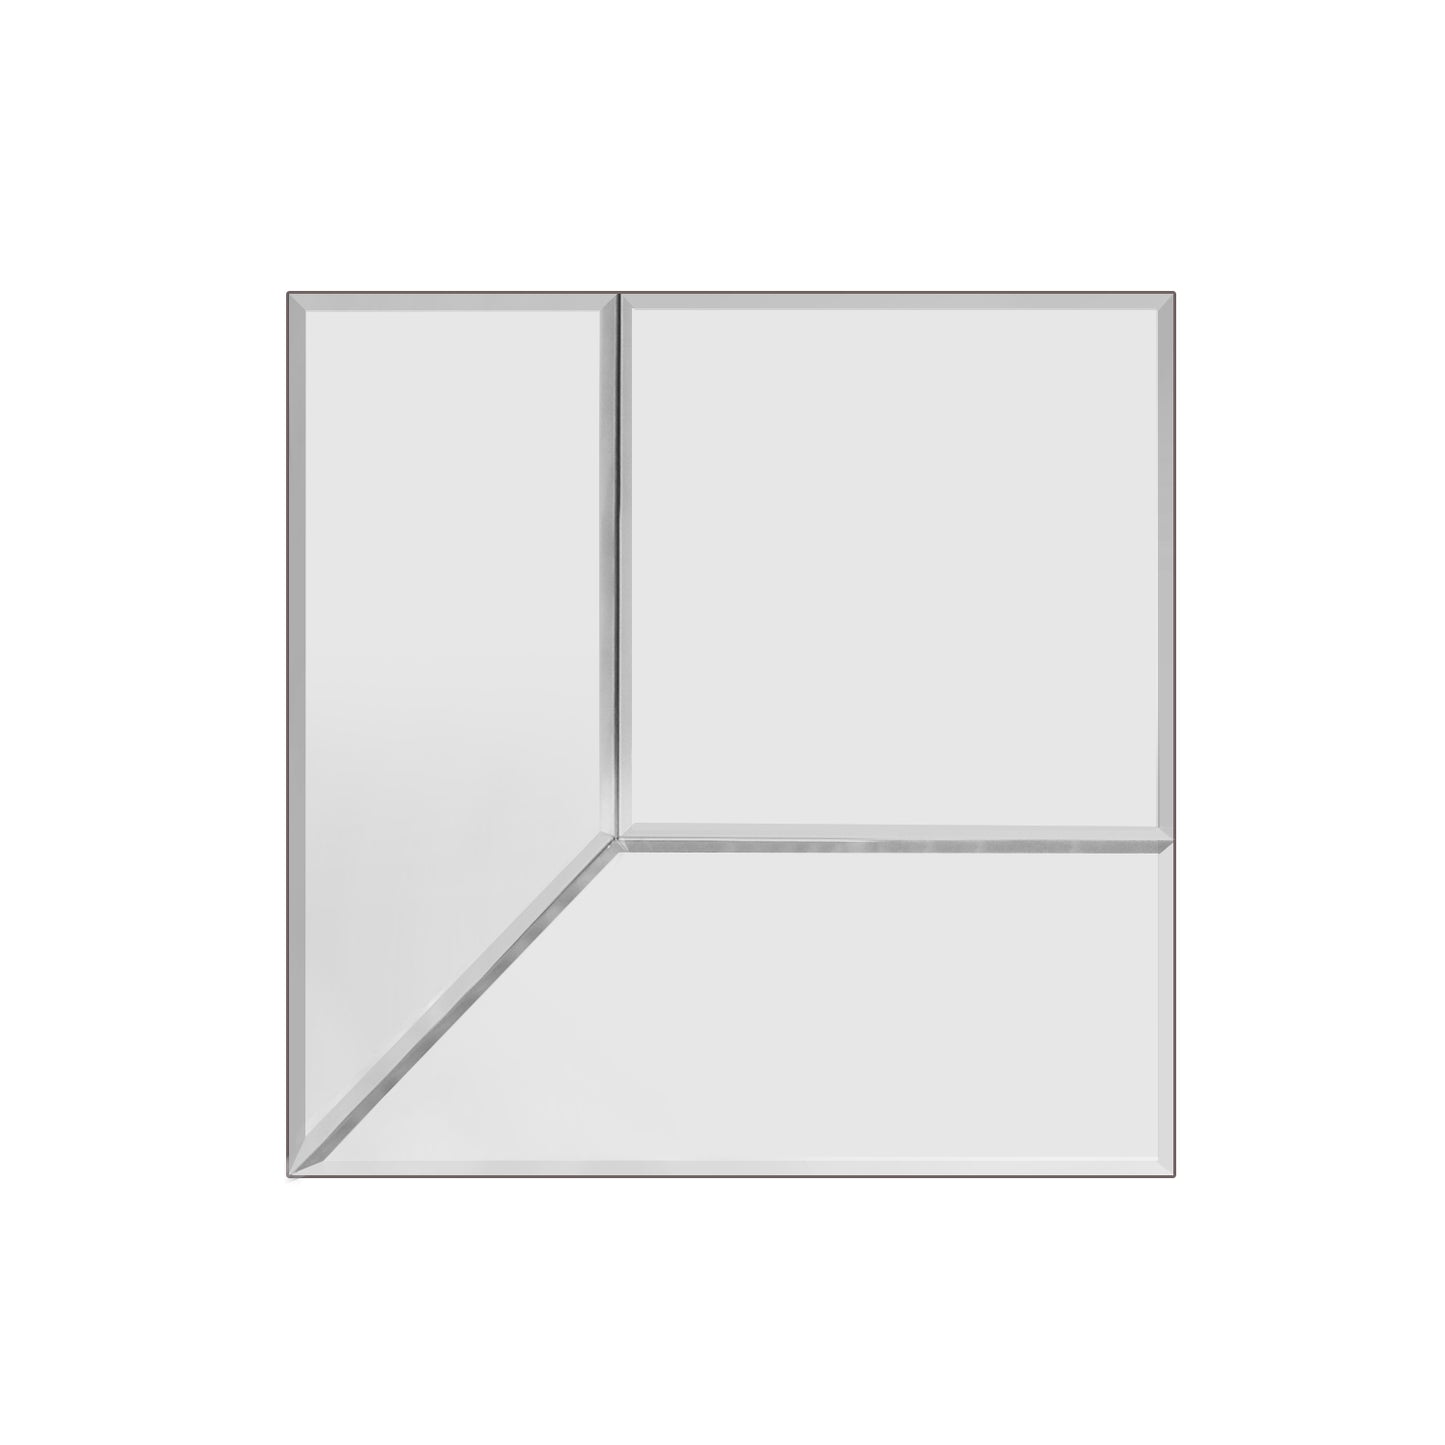 Reversible Square XL- Mirror - Reversible - Beveled Mirror - Unique Wall Decor